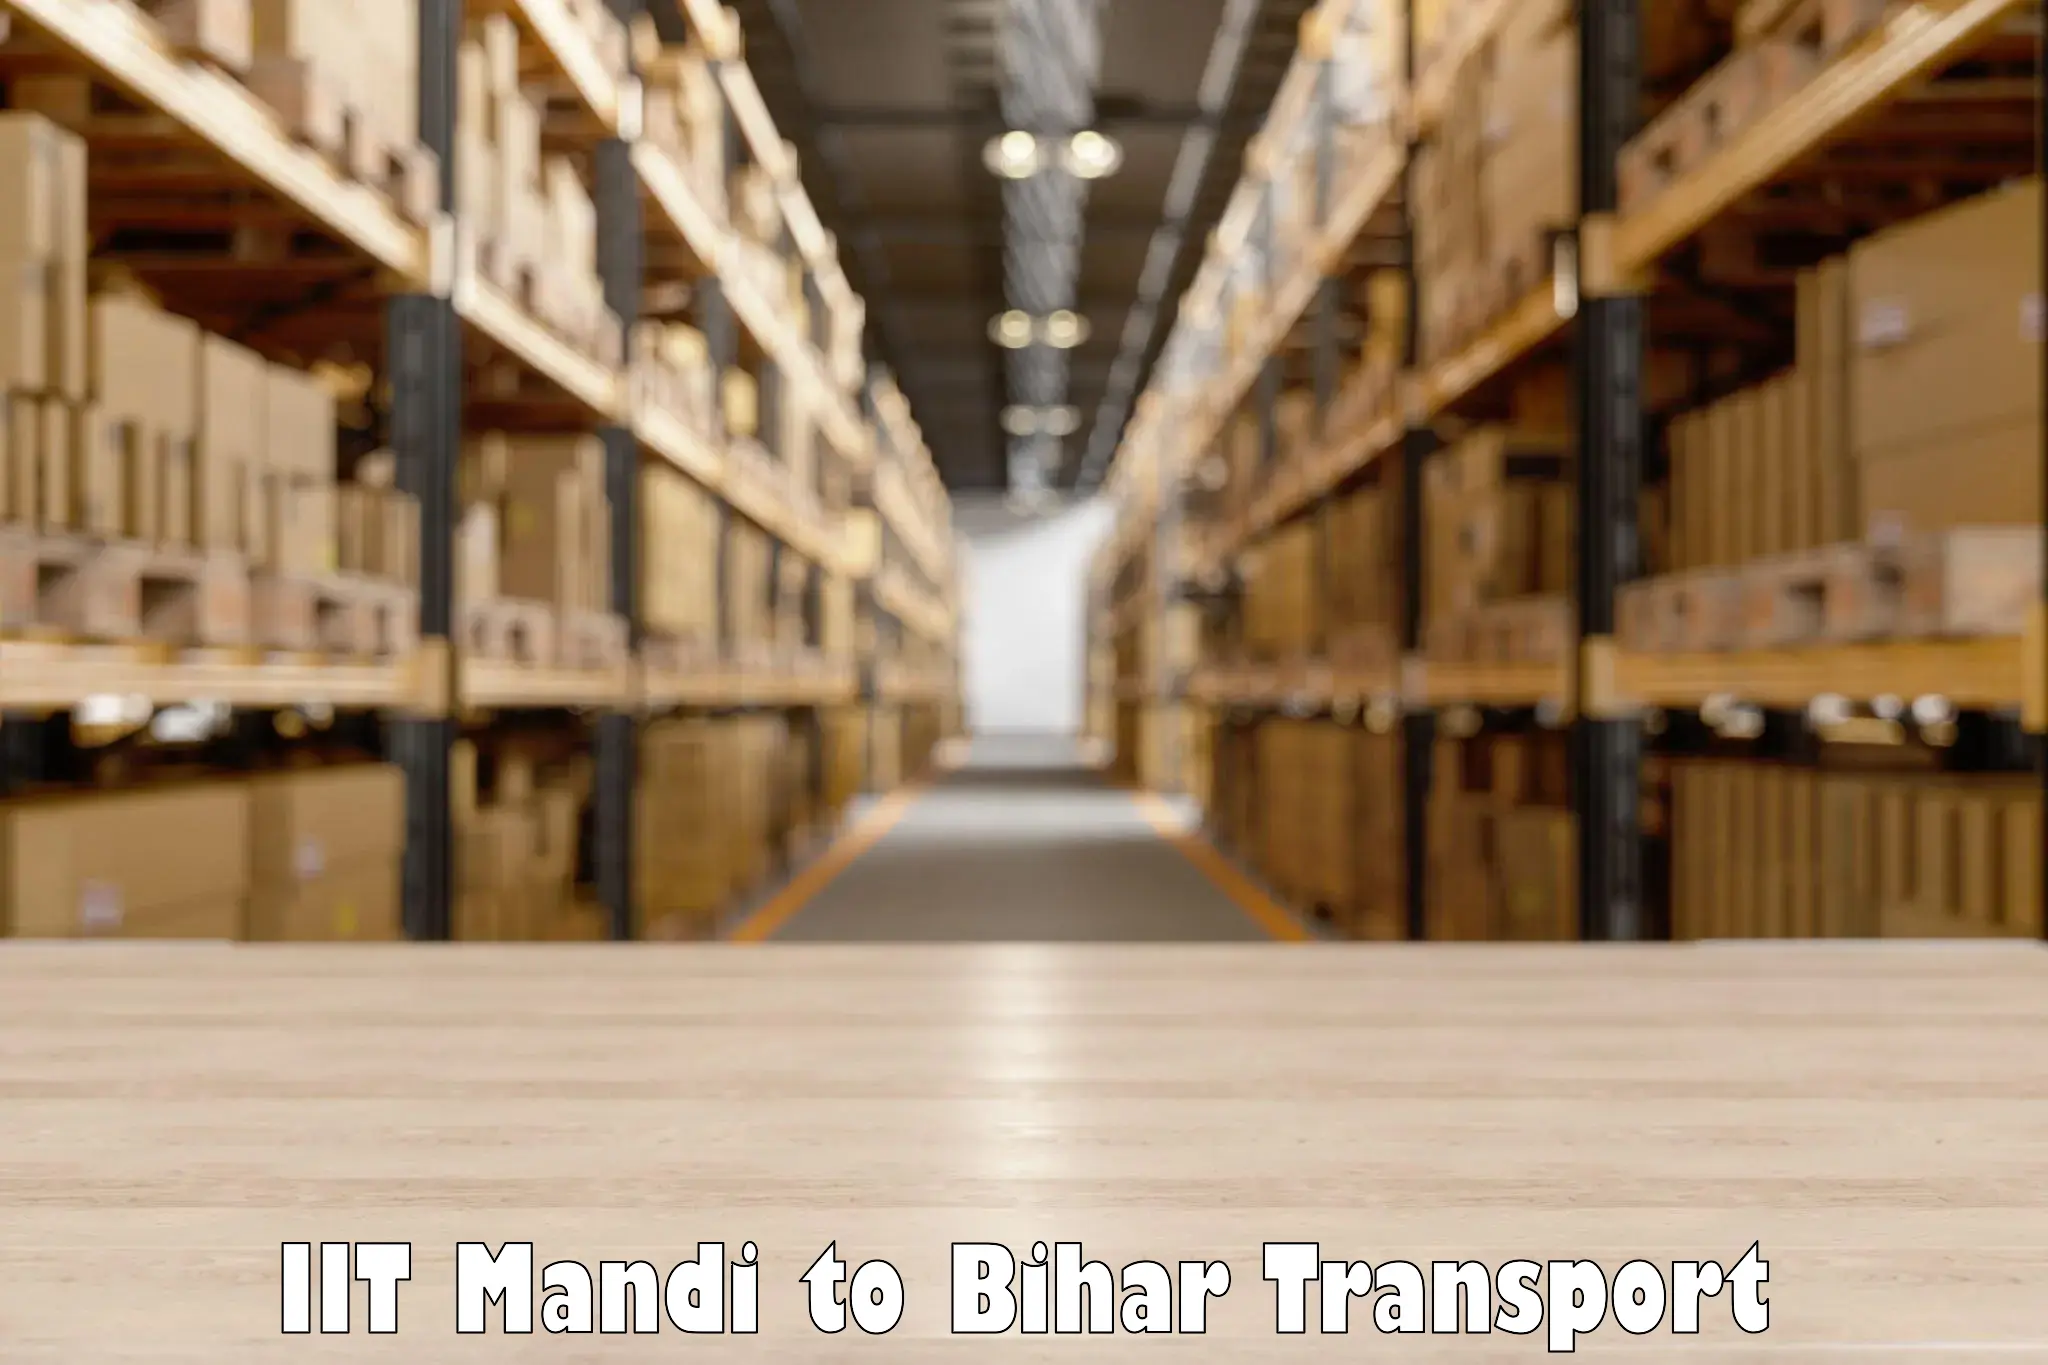 Vehicle transport services IIT Mandi to Barachati